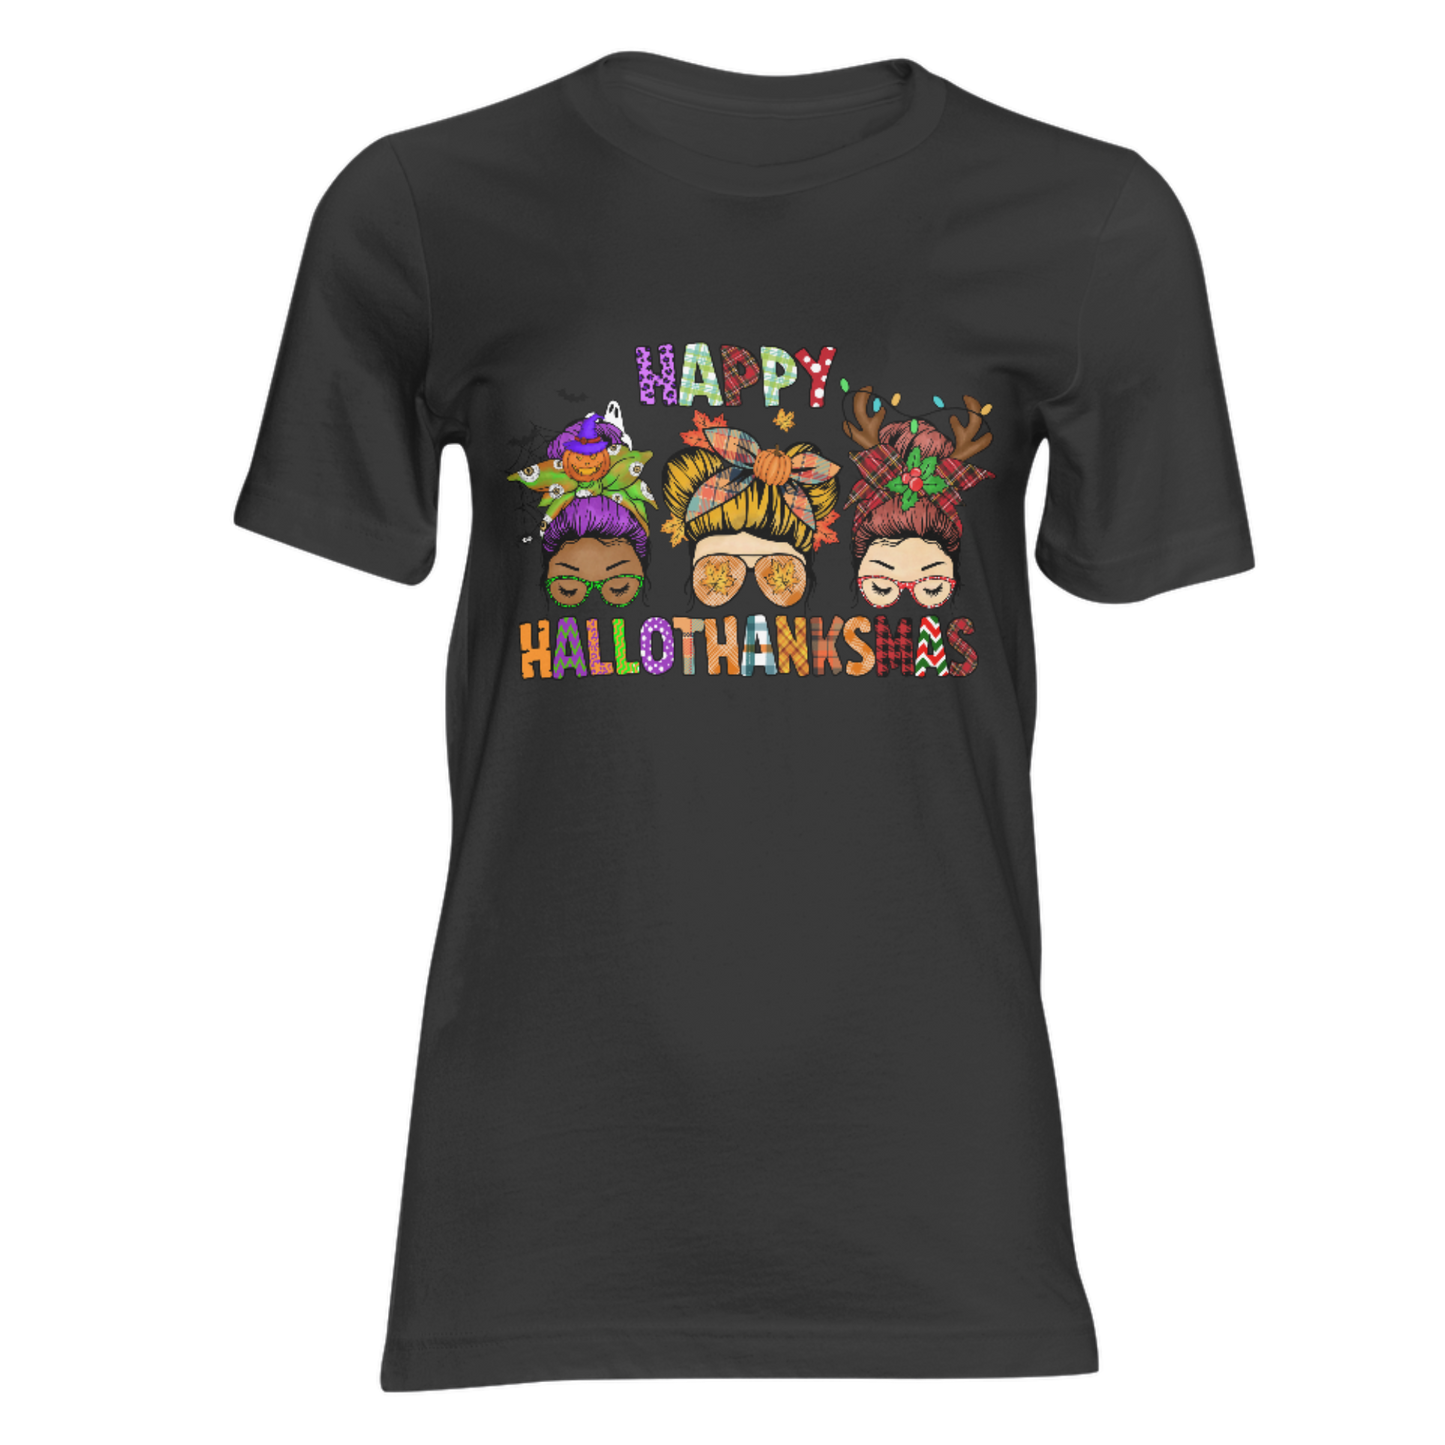 Happy Hallowthanksmas Multi Culture ladies Shirt